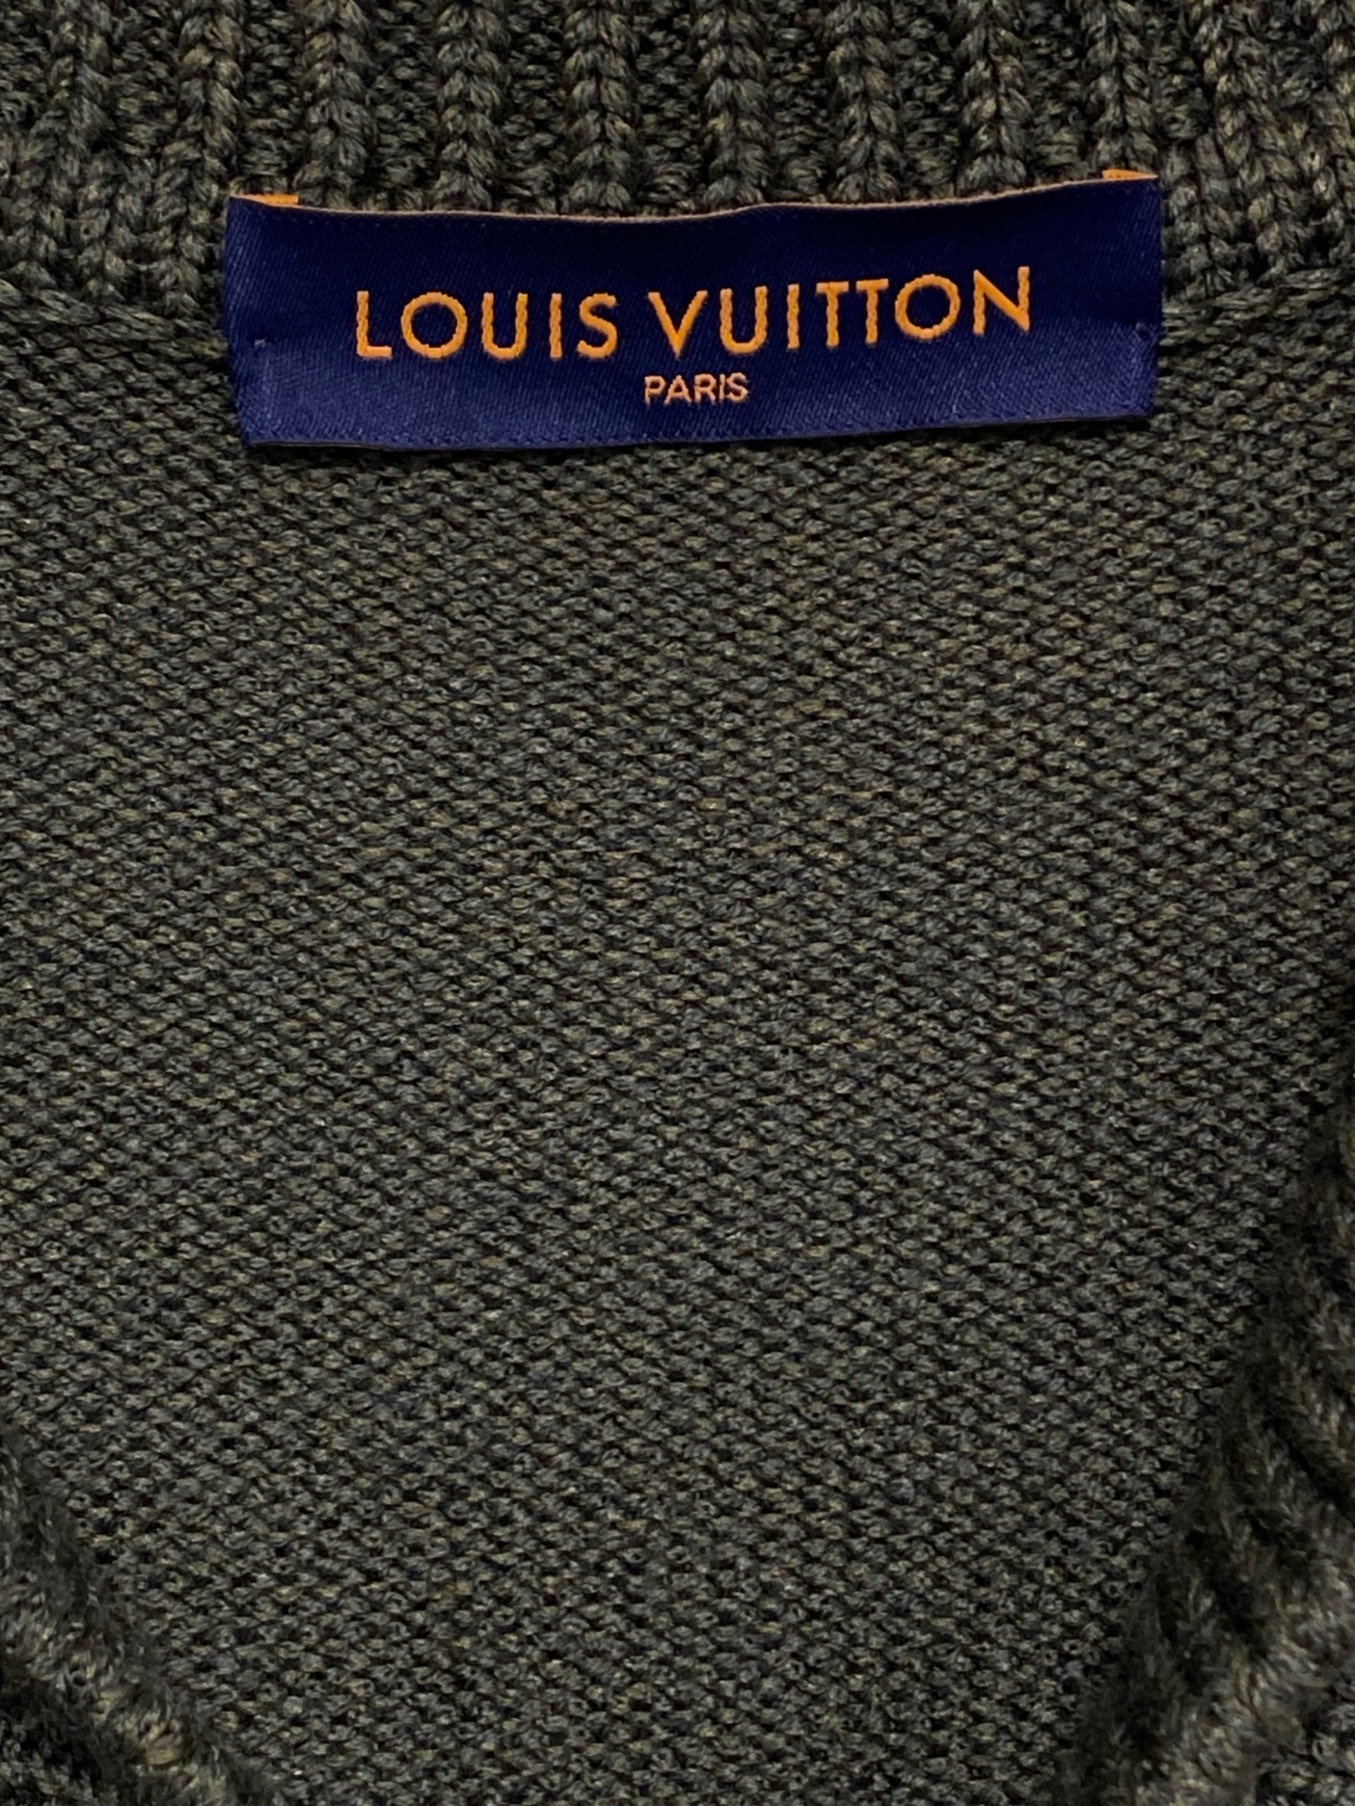 LOUIS VUITTON (ルイ ヴィトン) NIGO (ニゴ) Sophisticated Tiger Cardigan オリーブ サイズ:L